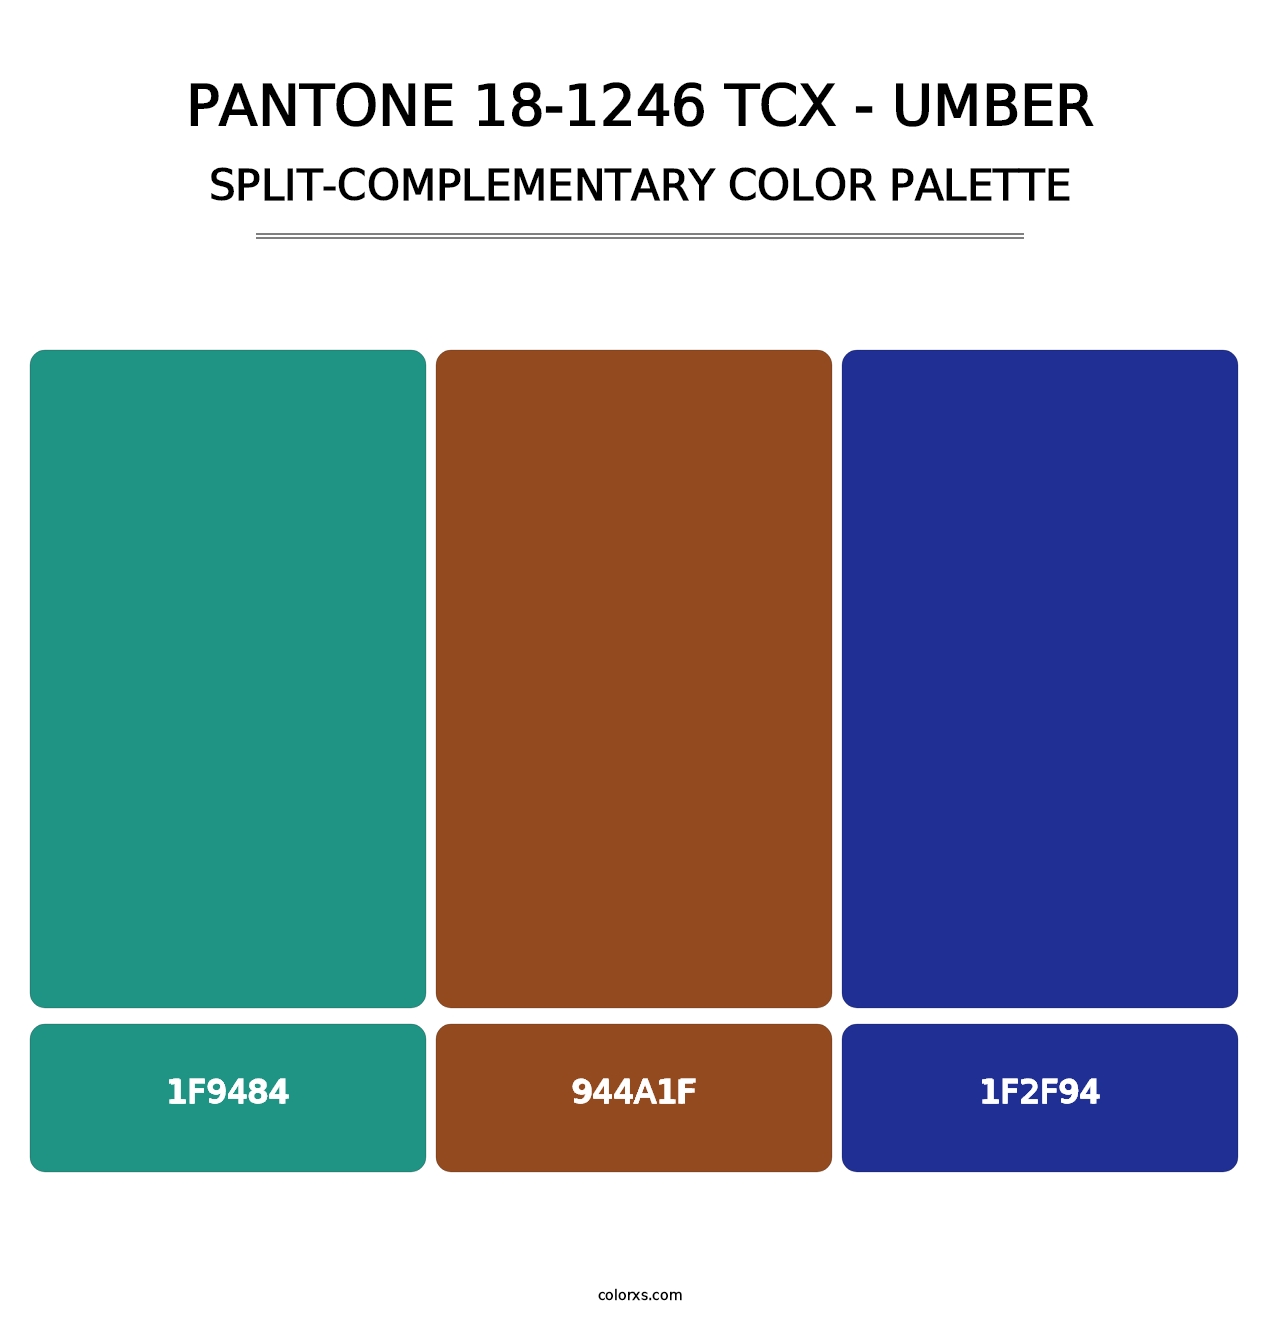 PANTONE 18-1246 TCX - Umber - Split-Complementary Color Palette